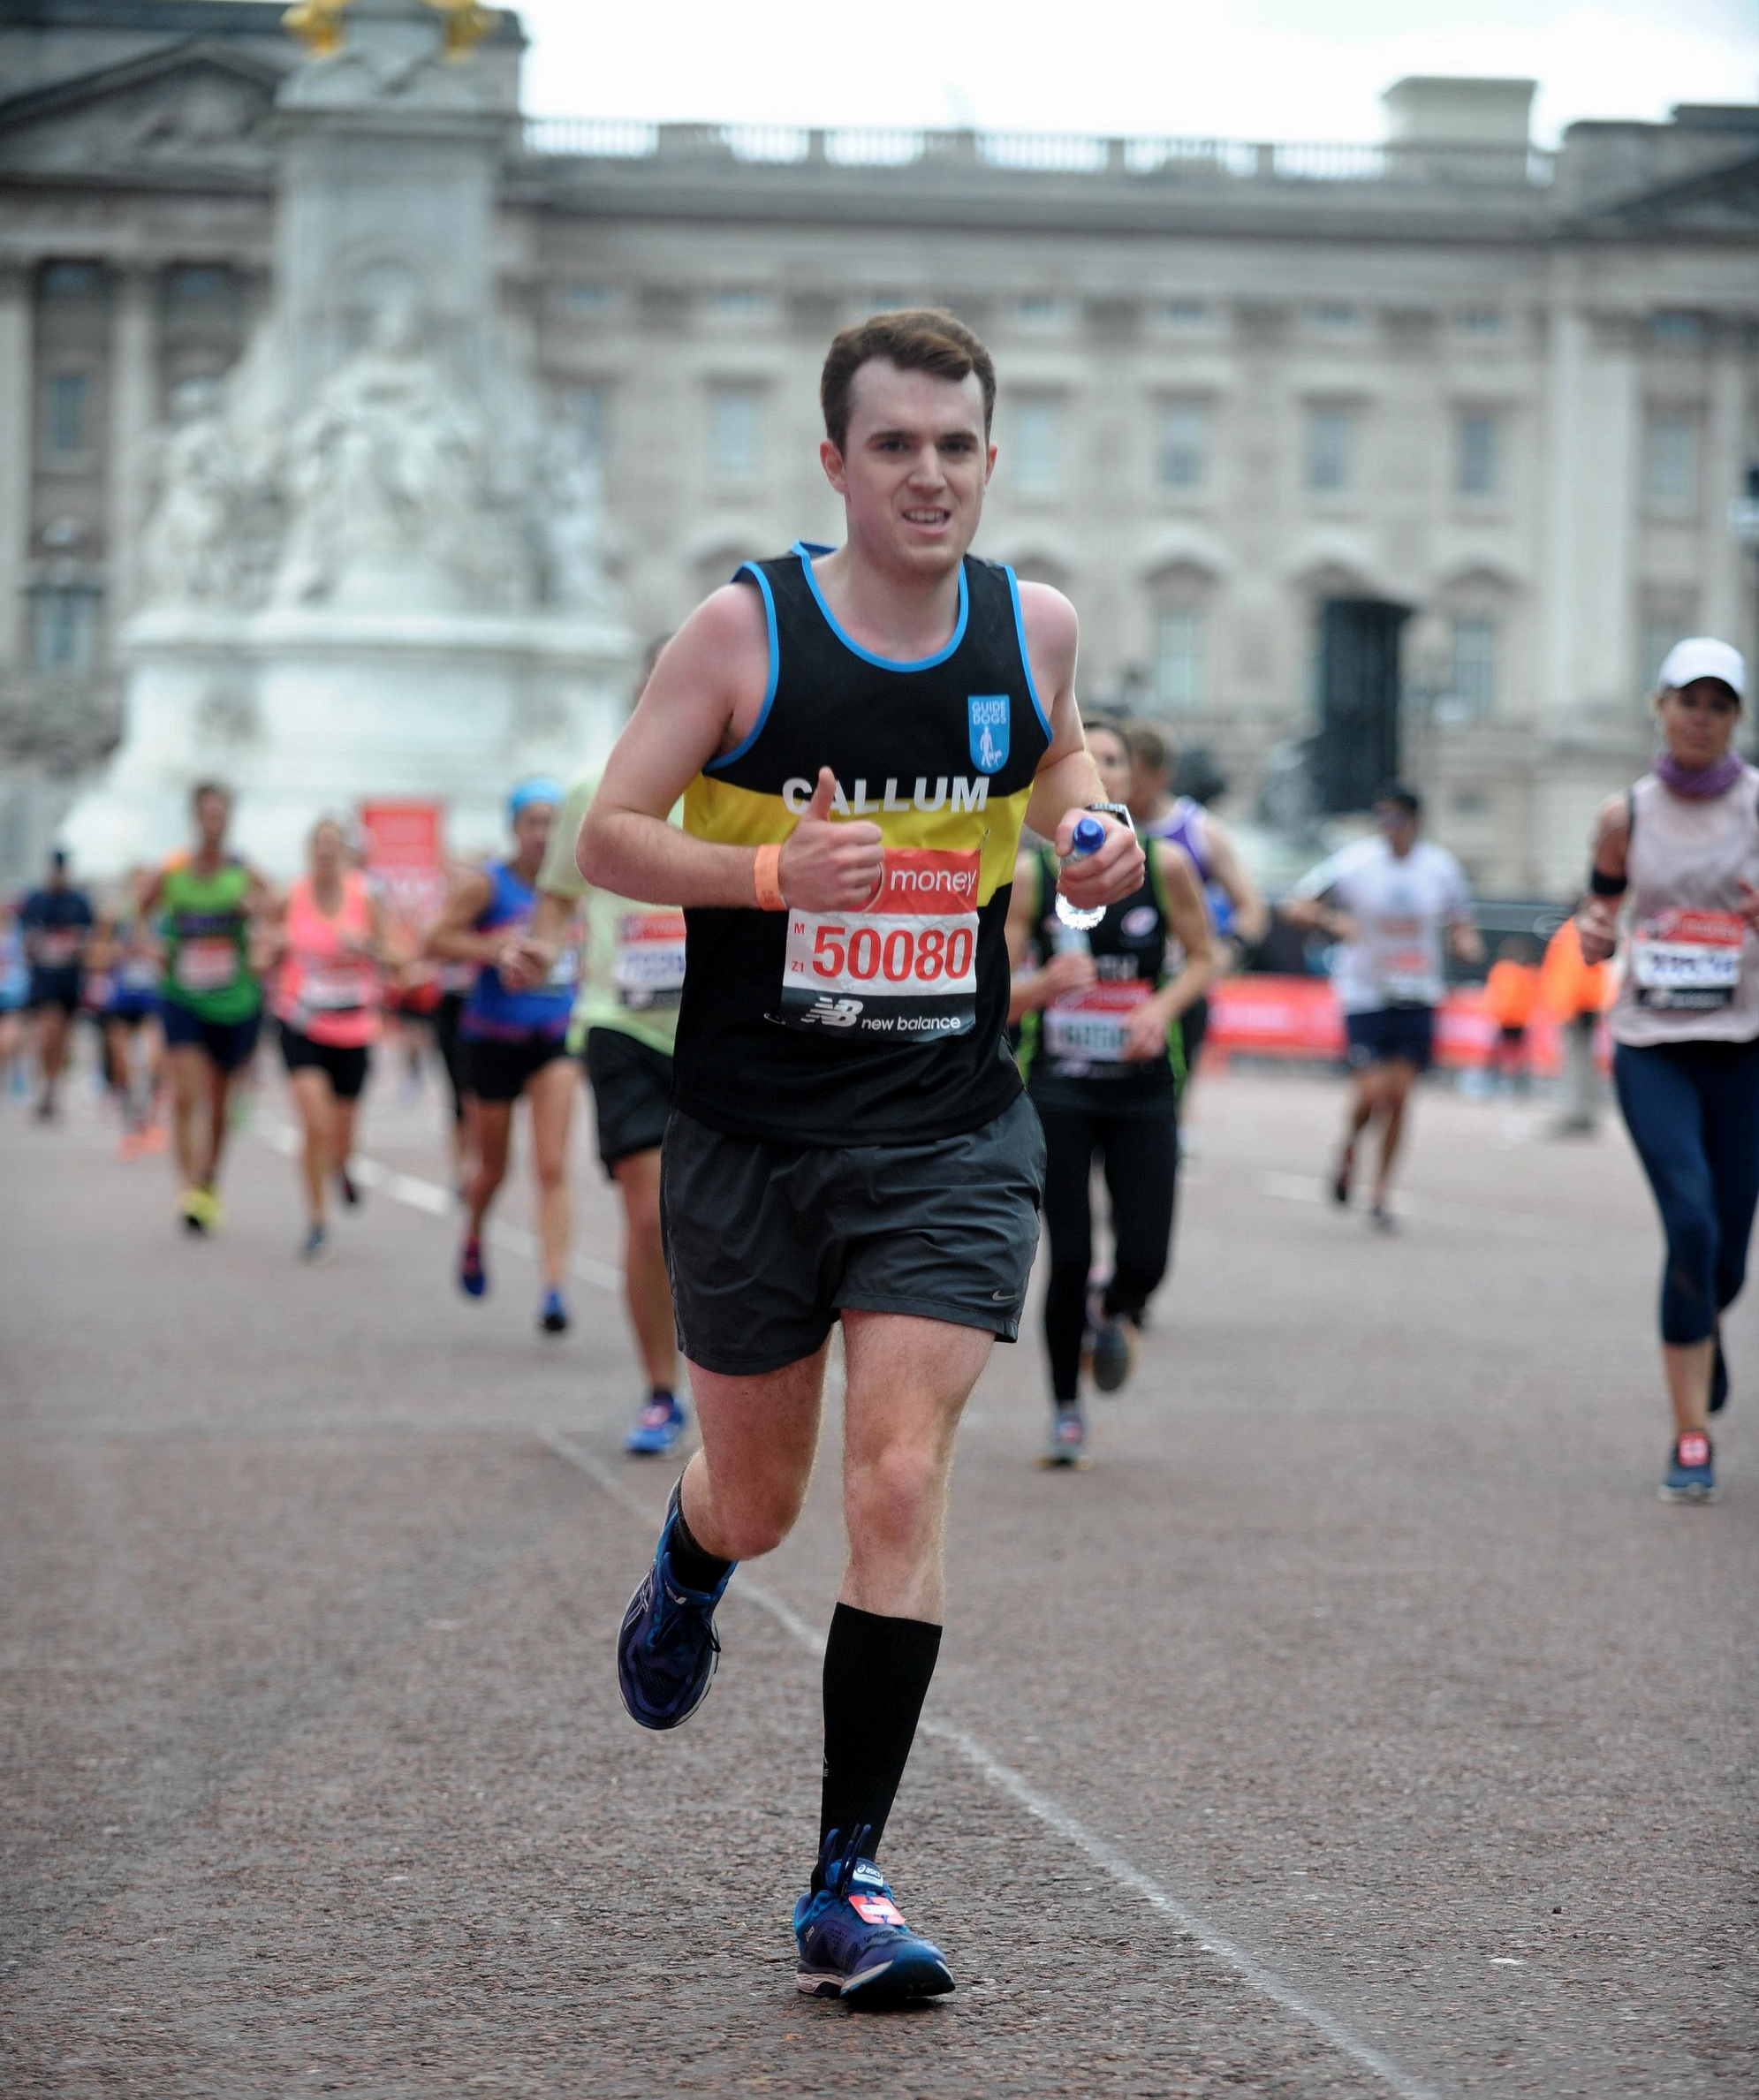 Callum Telehealth London Marathon Calf Back